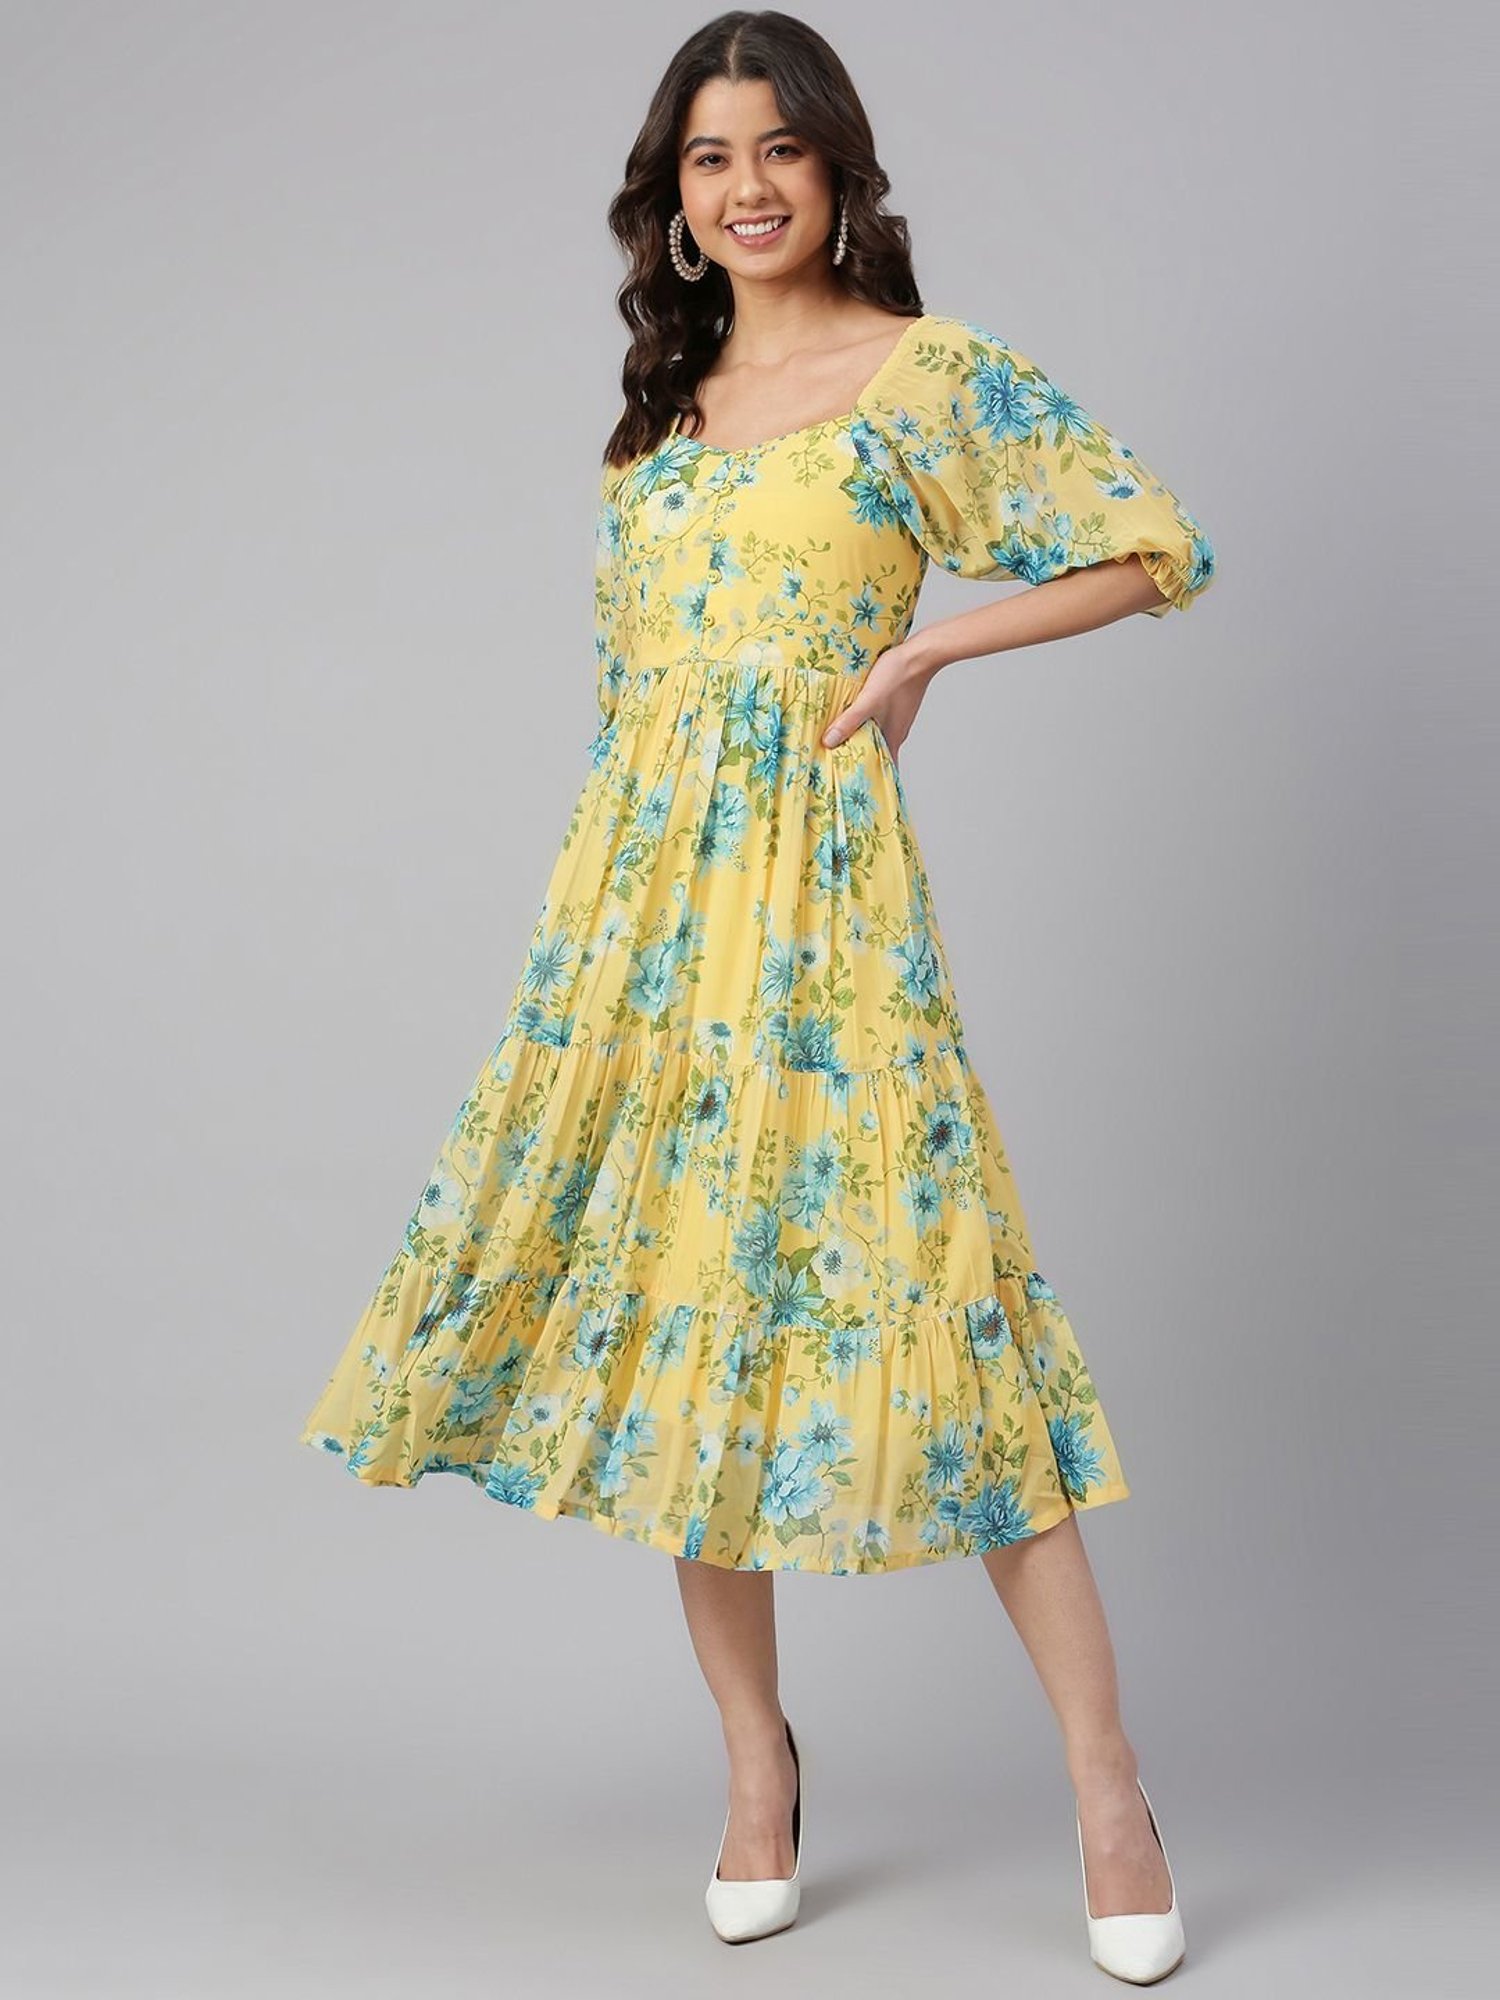 Buy Yellow Floral Print Shirt Dress Online - Aarke International Store View